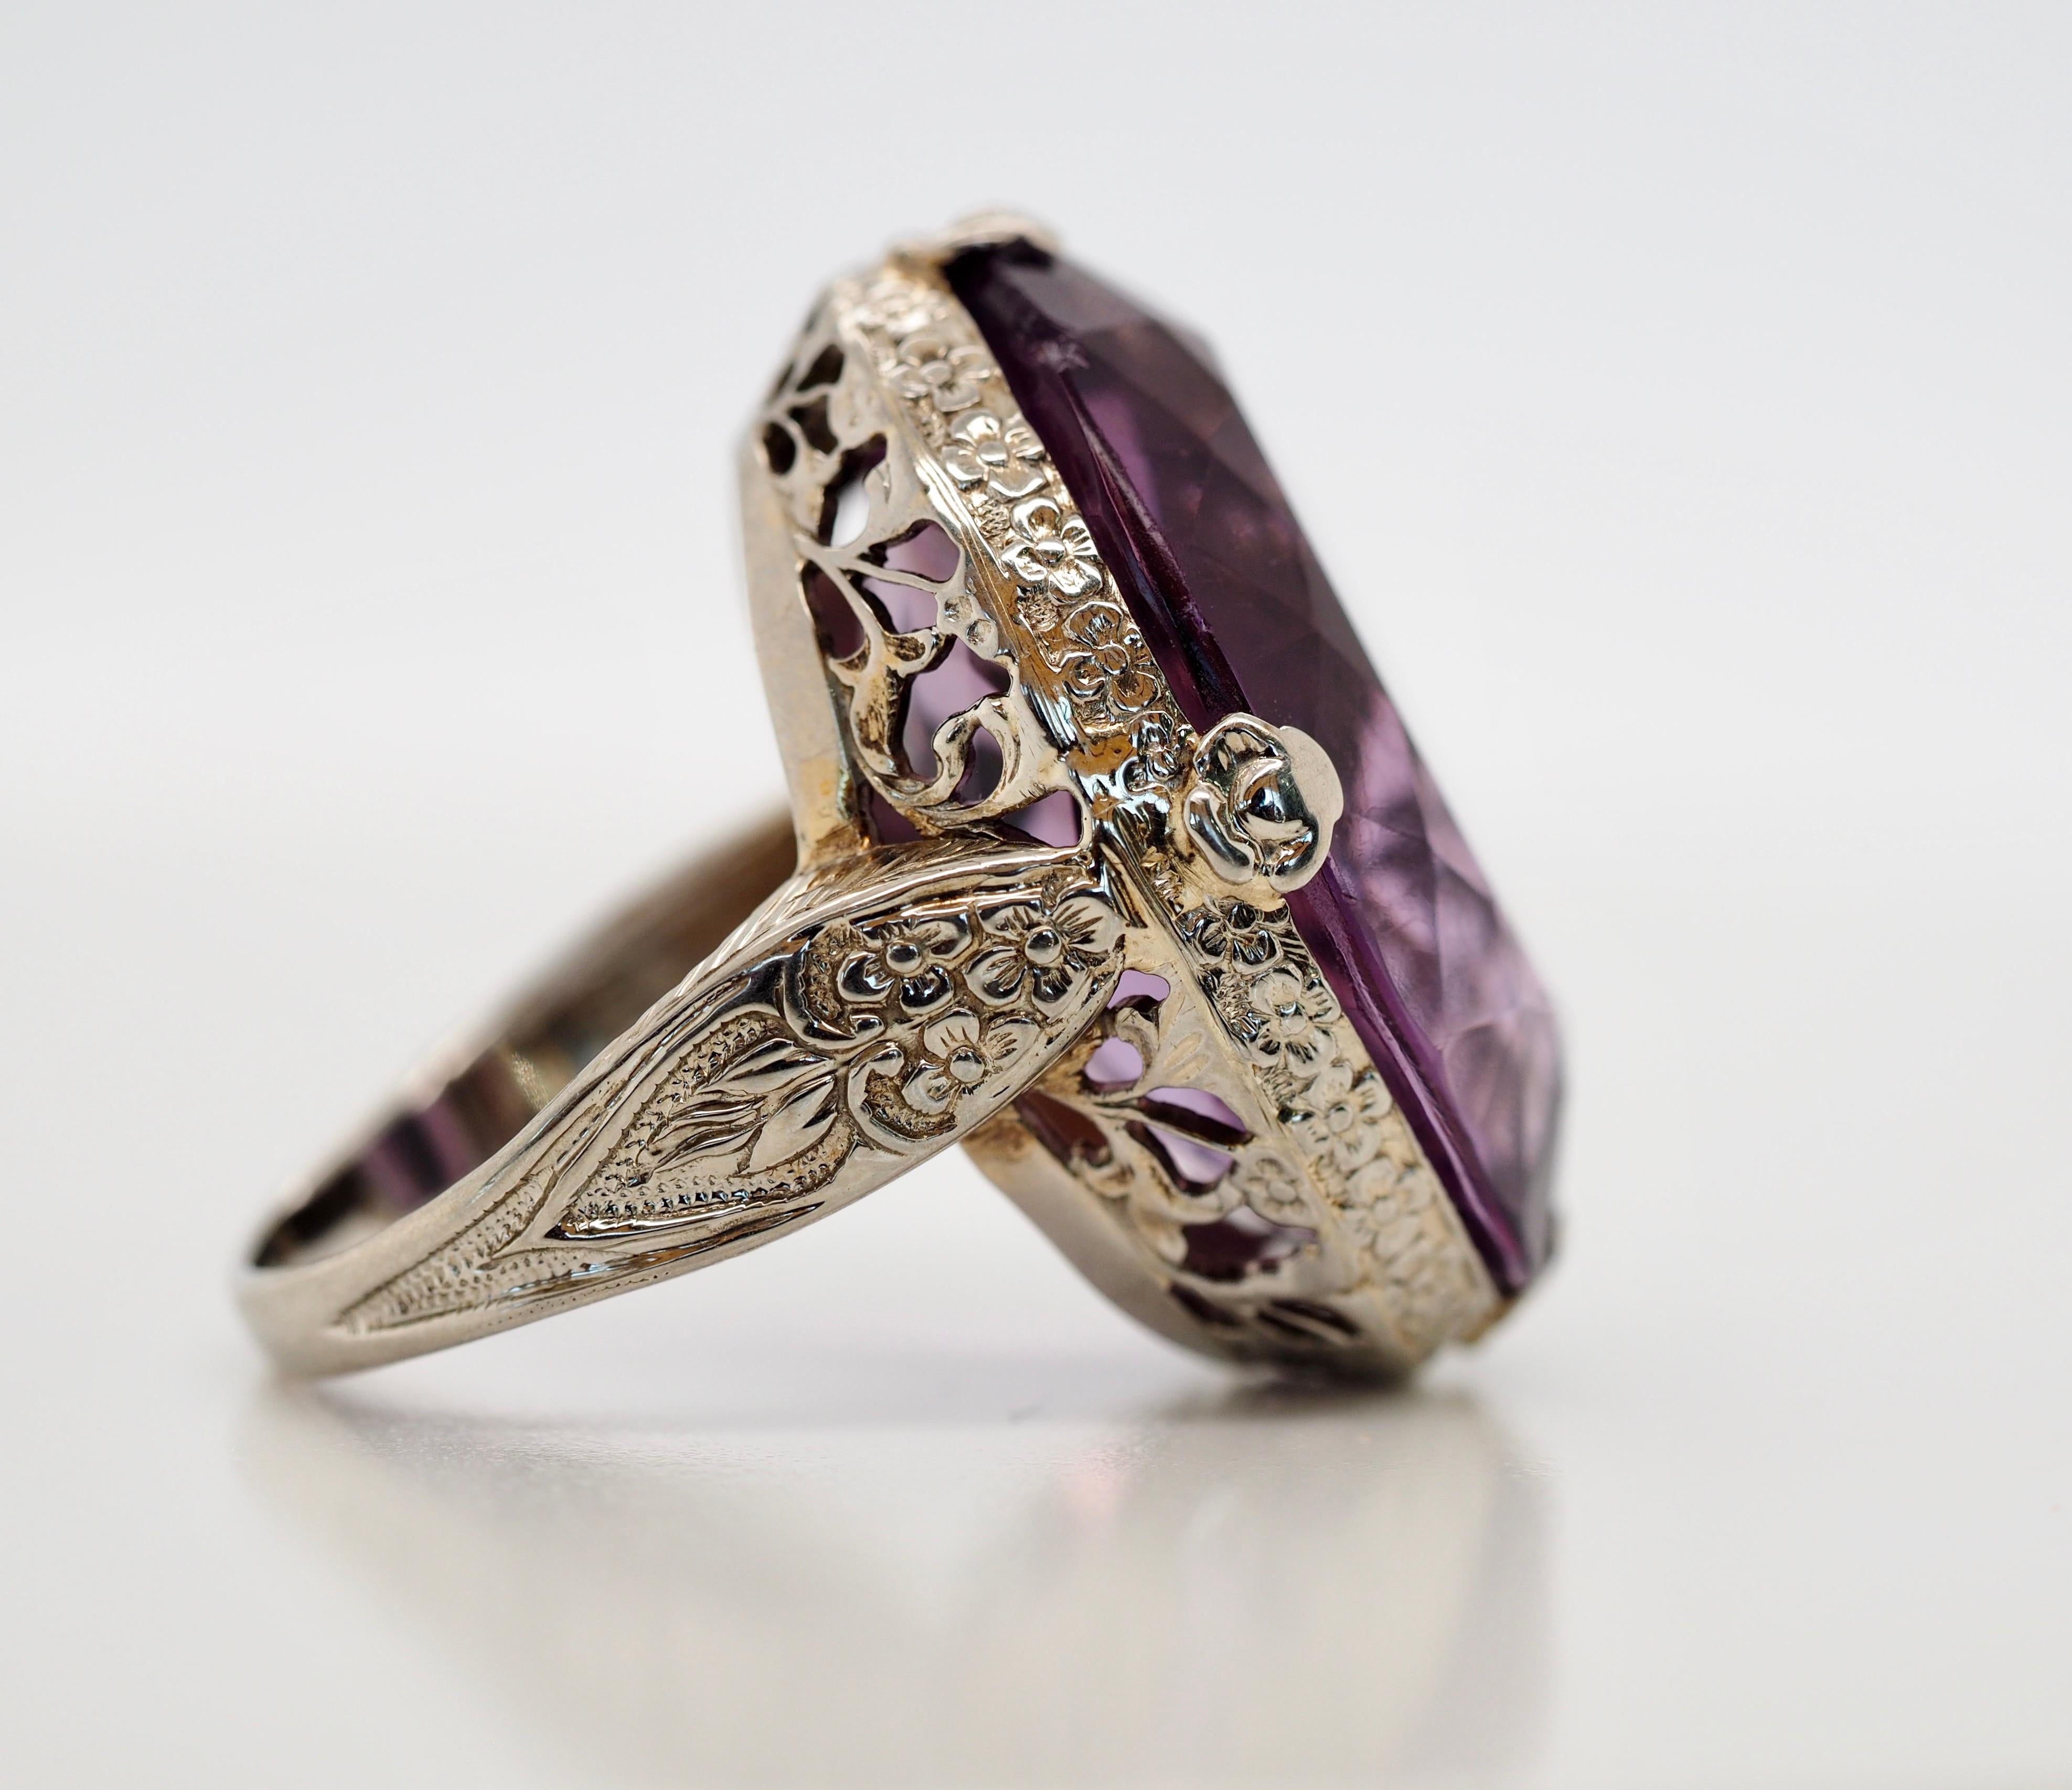 Oval Cut Stunning Art Deco Amethyst Ring Set in Floral Filigreed 18 Karat White Gold